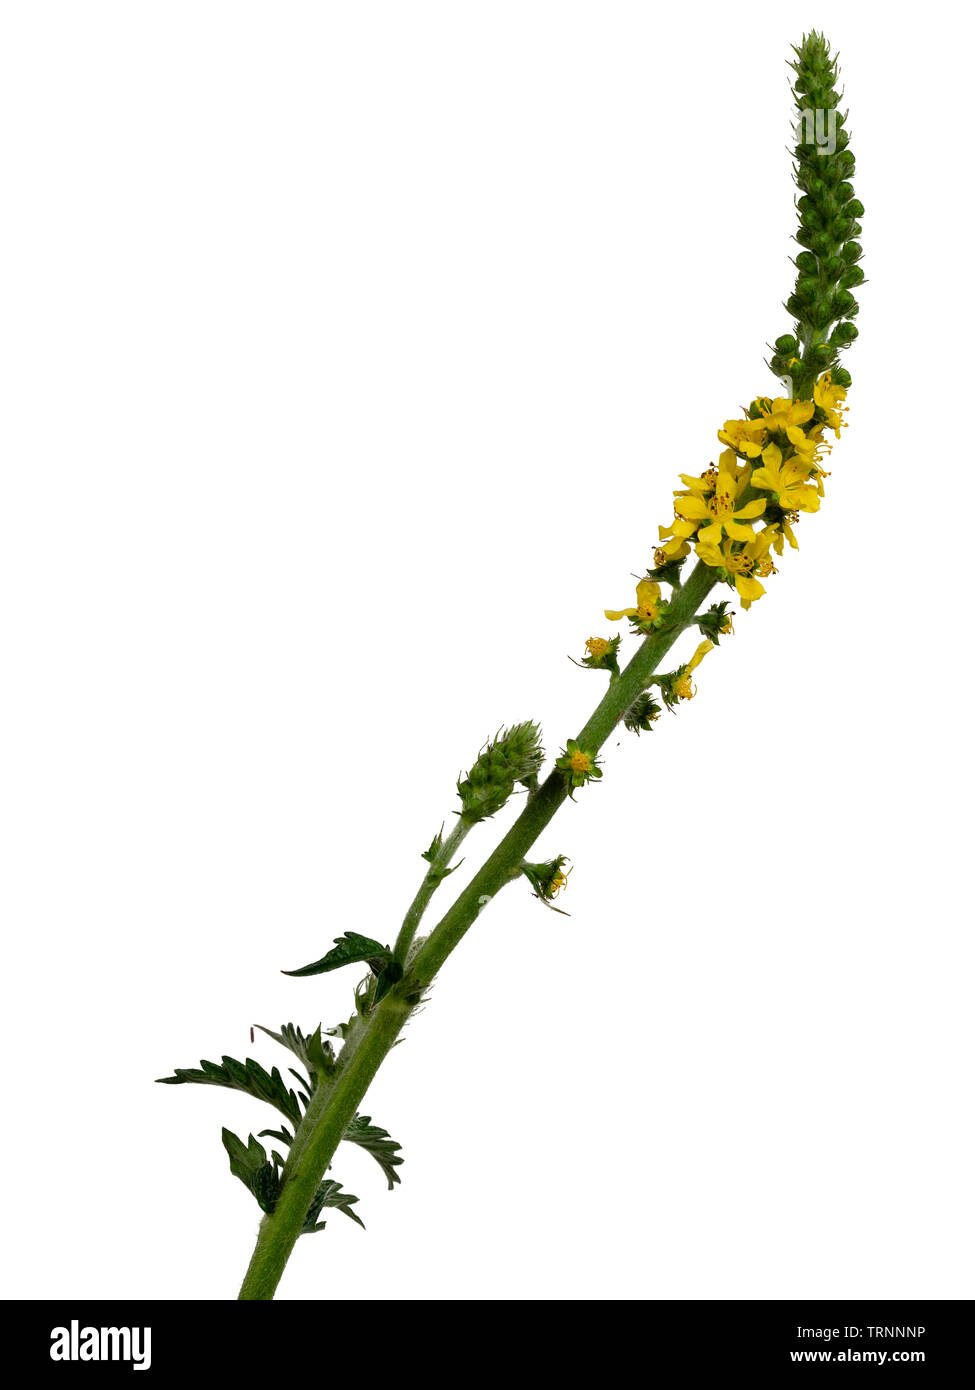 Spike of the UK wild flower Agrimonia eupatoria, common agrimony, on a white background Stock Photo